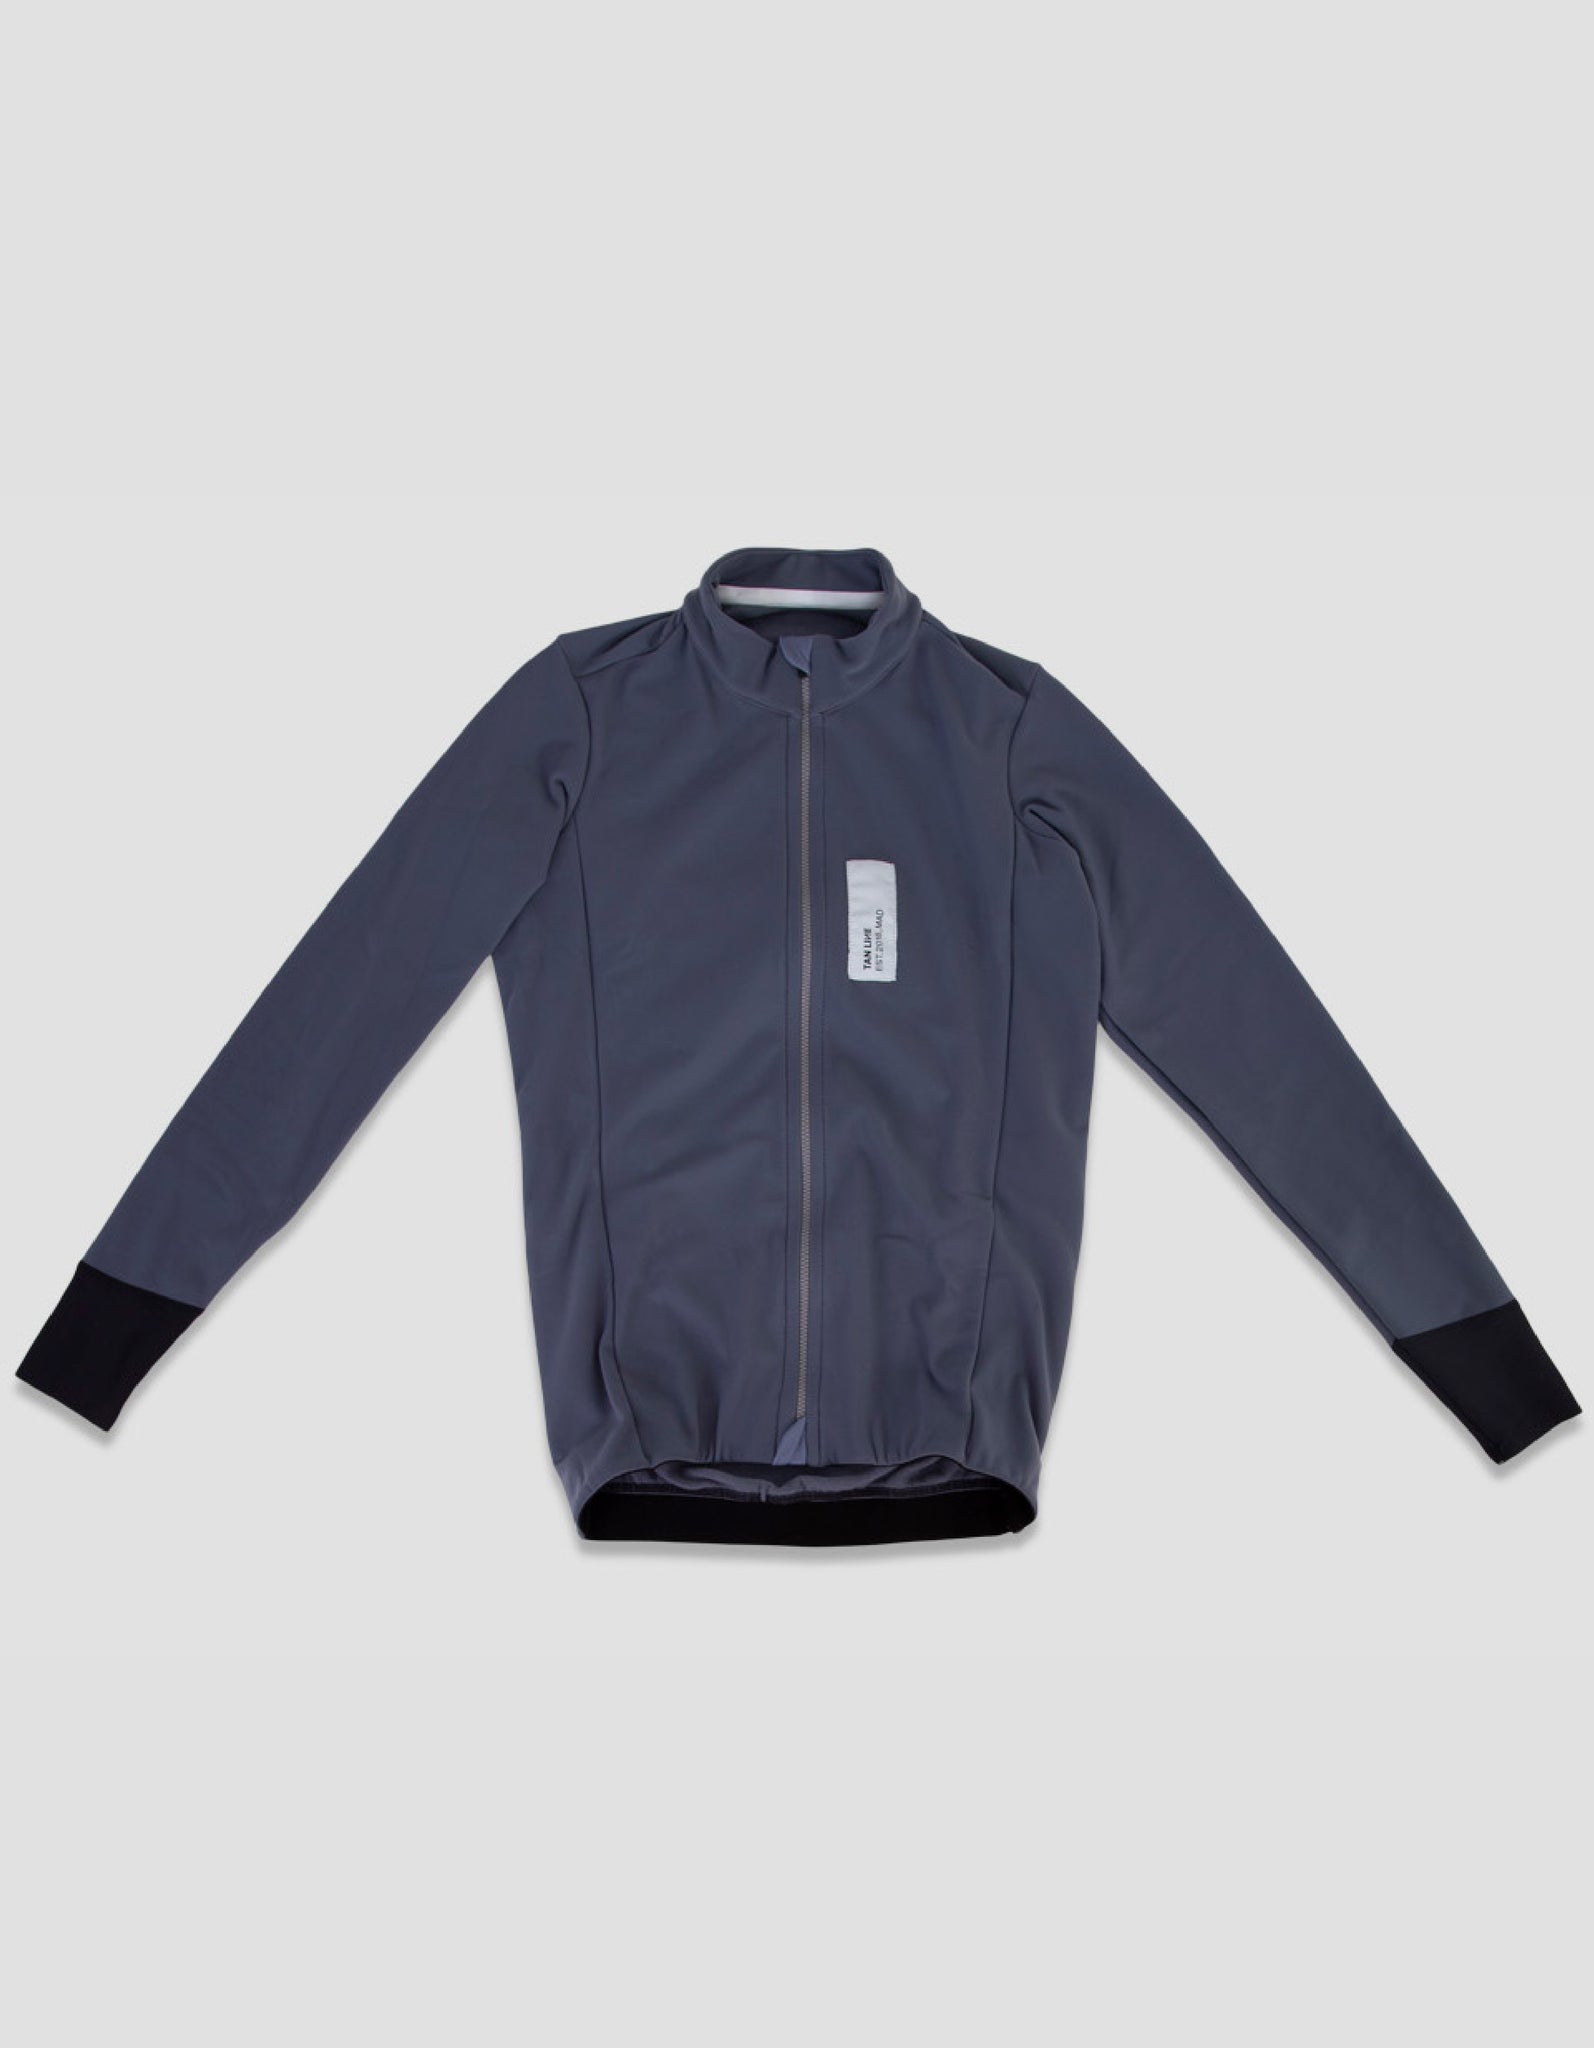 Pass Jacket ~ Anthracite Grey